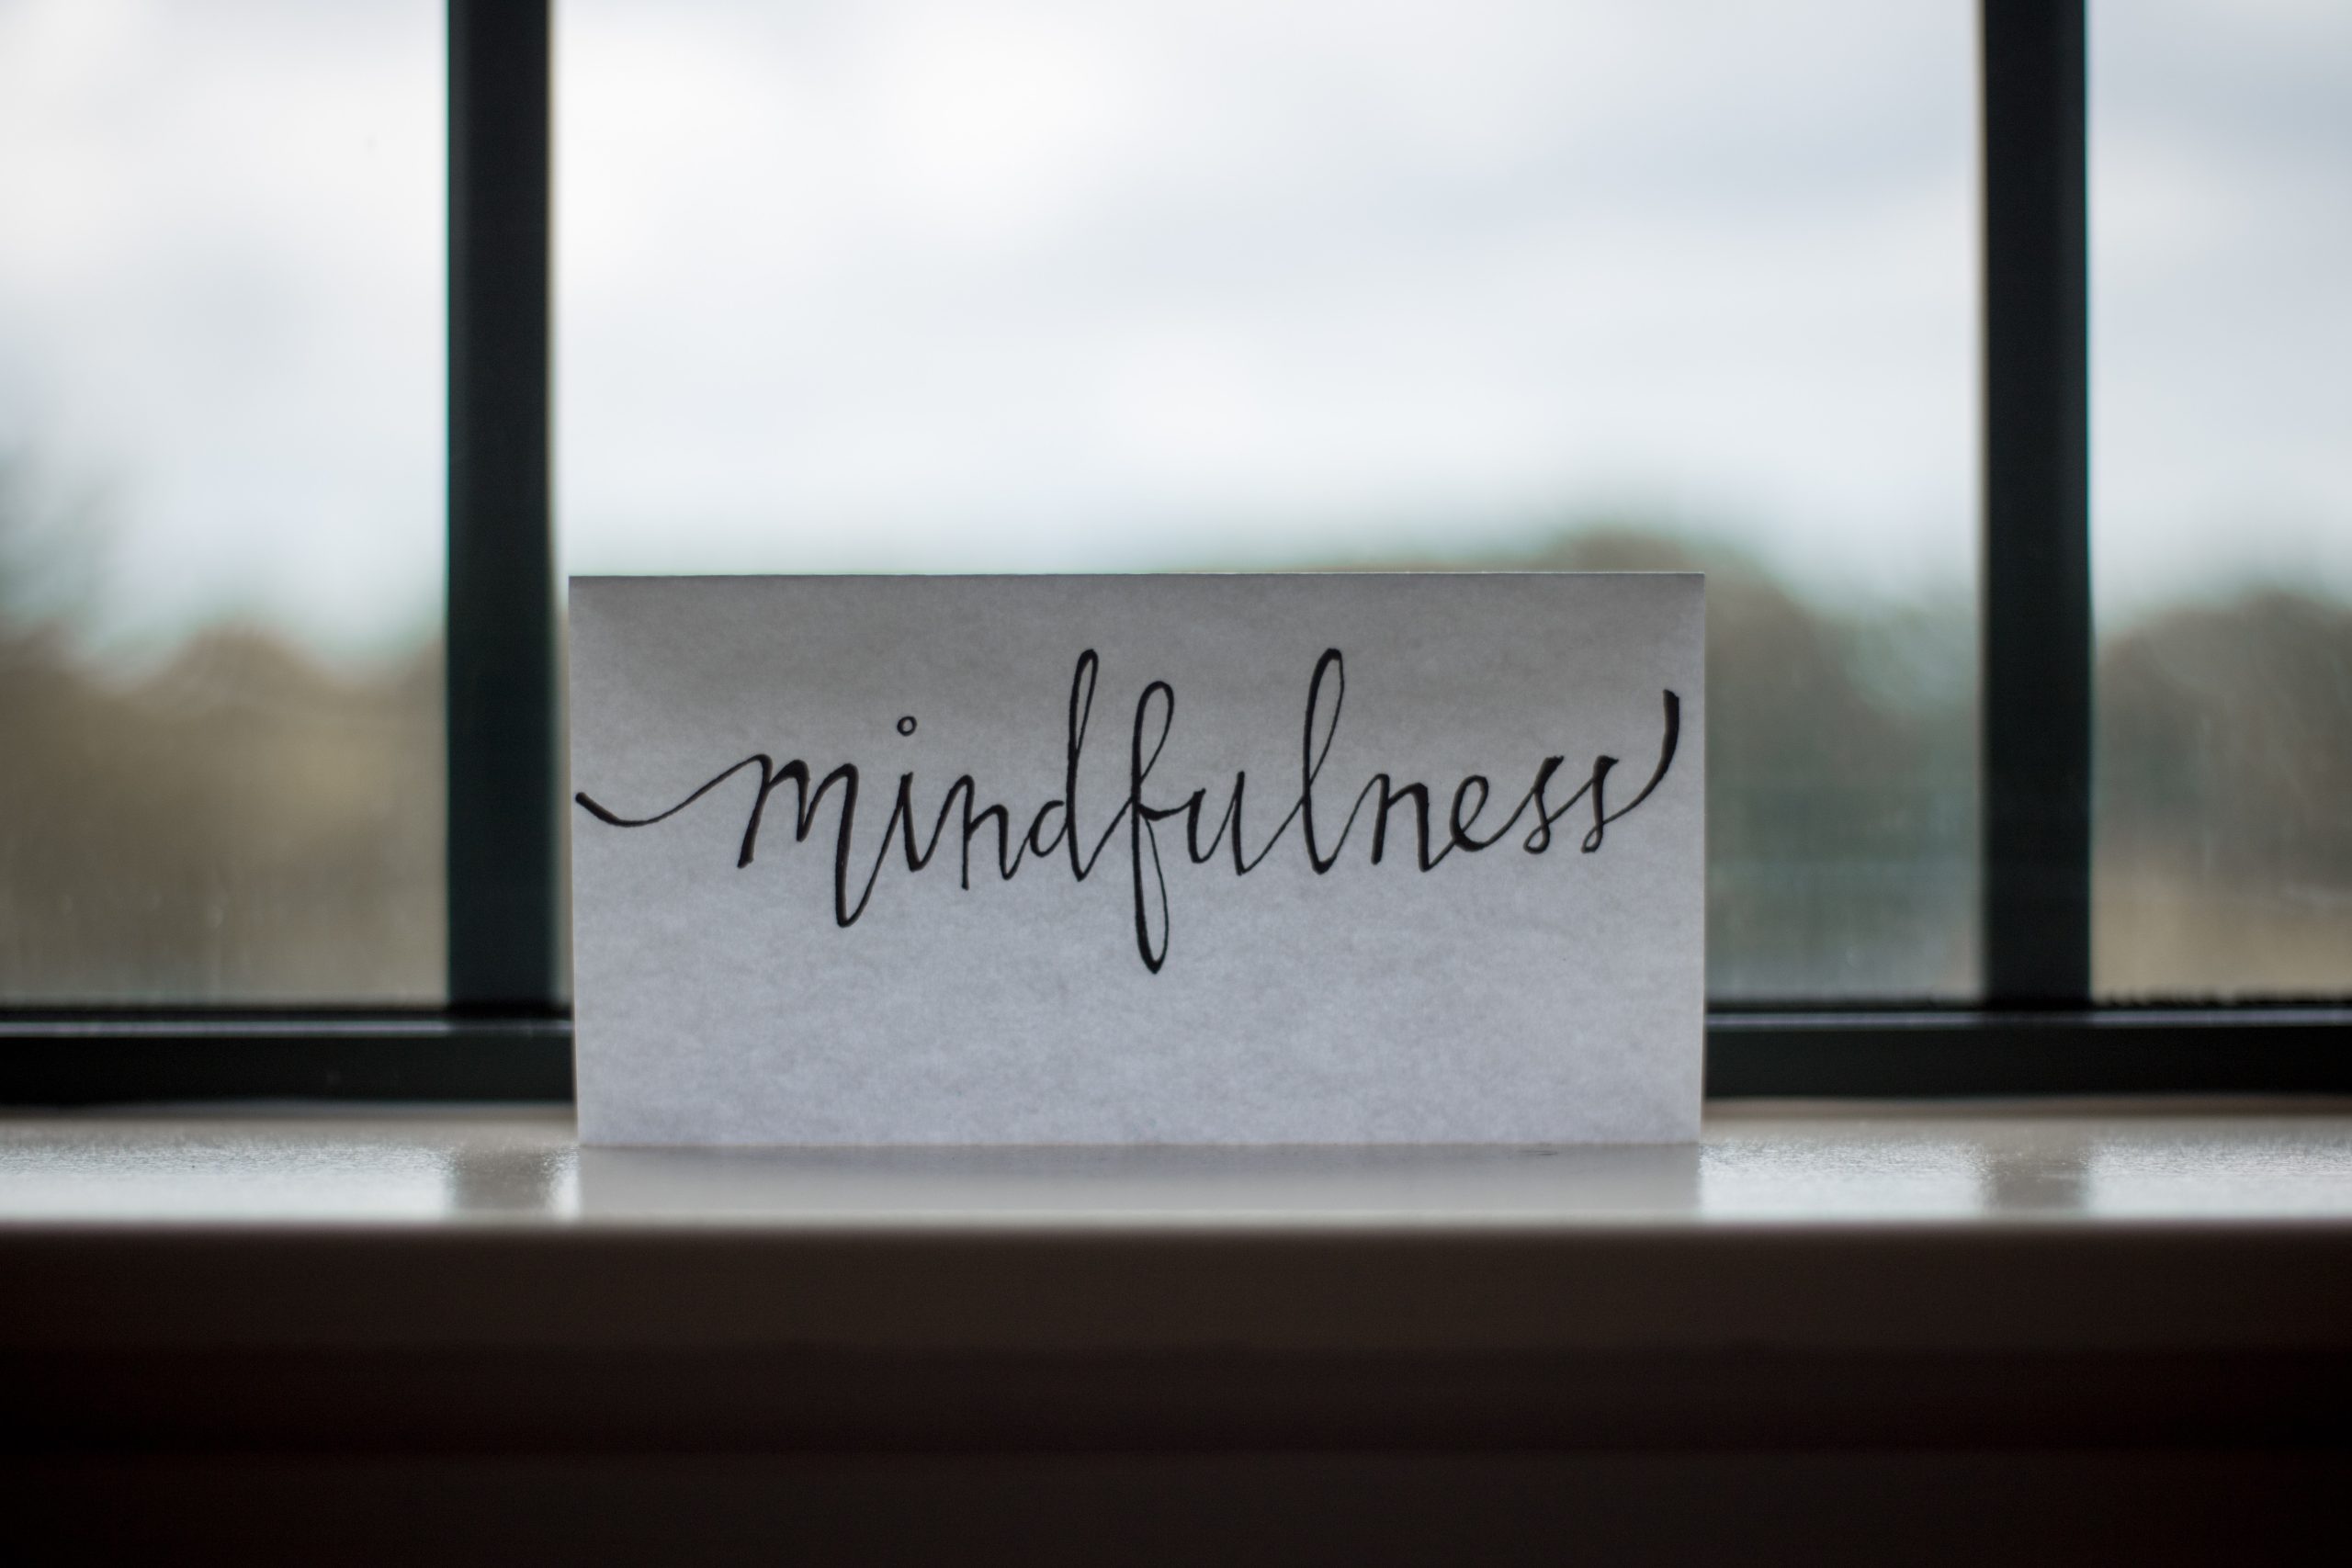 Everyday Mindfulness